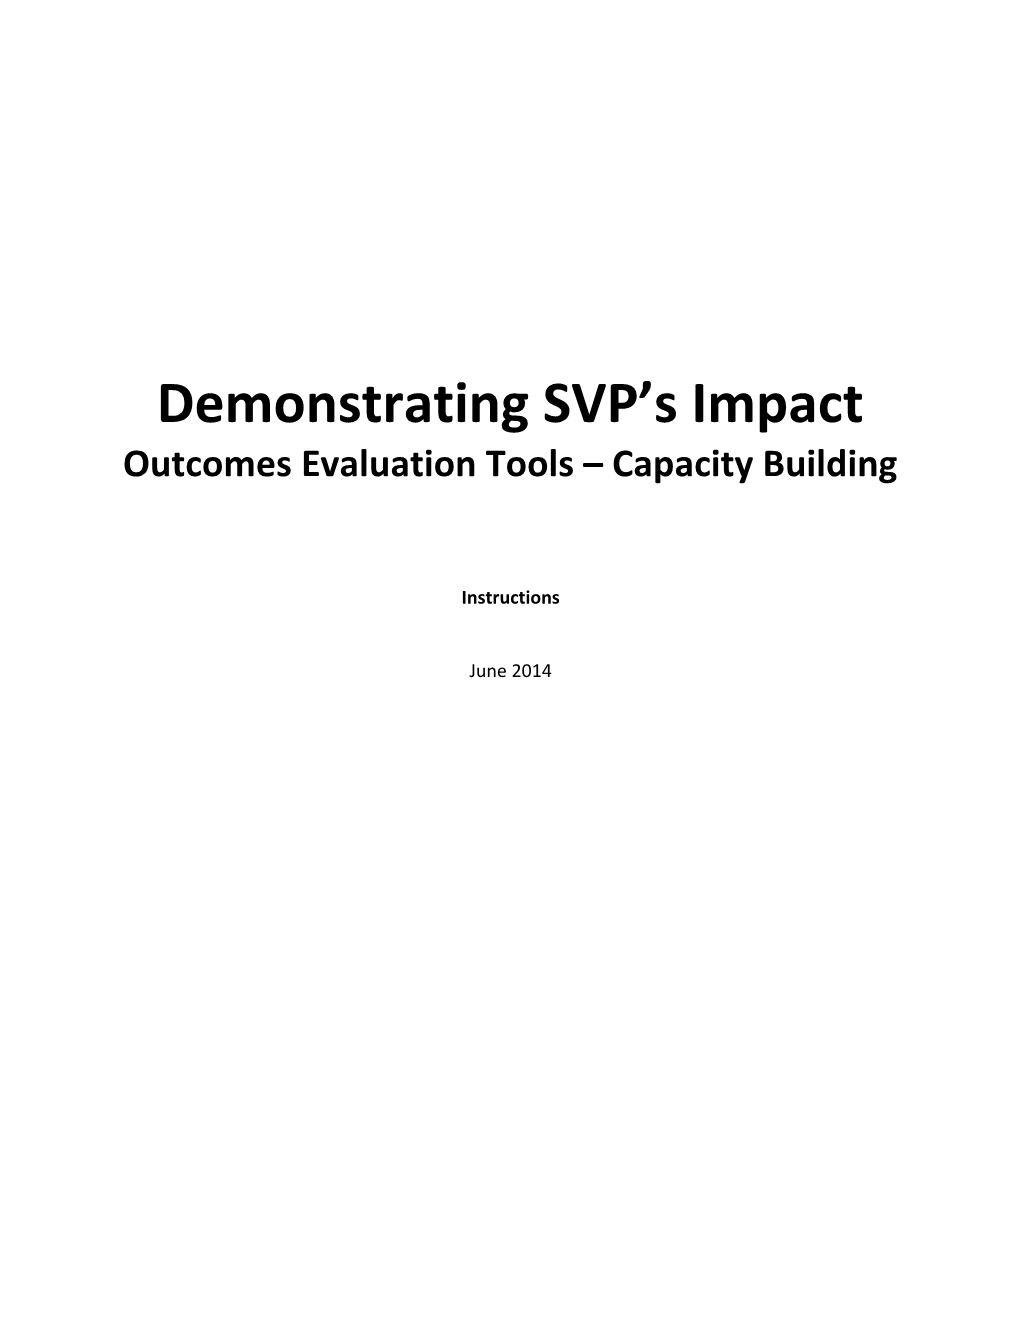 Outcomes Evaluation Tools Capacitybuilding